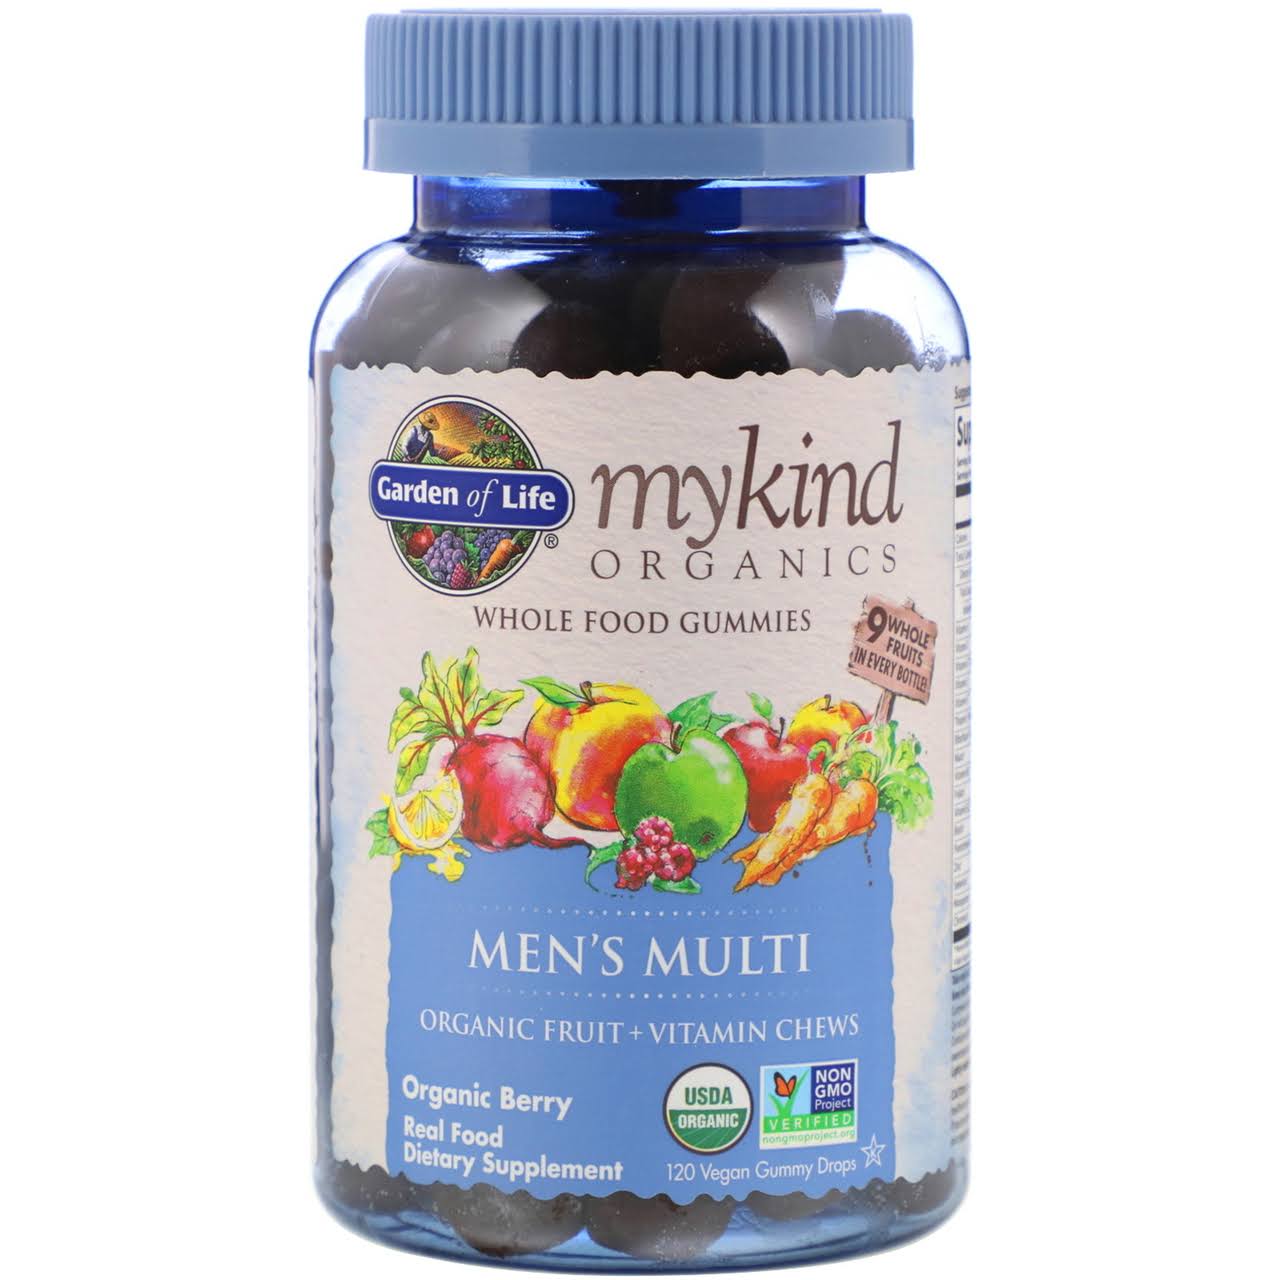 Garden of Life Mykind Organics Mens Multi Whole Food Gummies Vitamin - Berry, 120ct